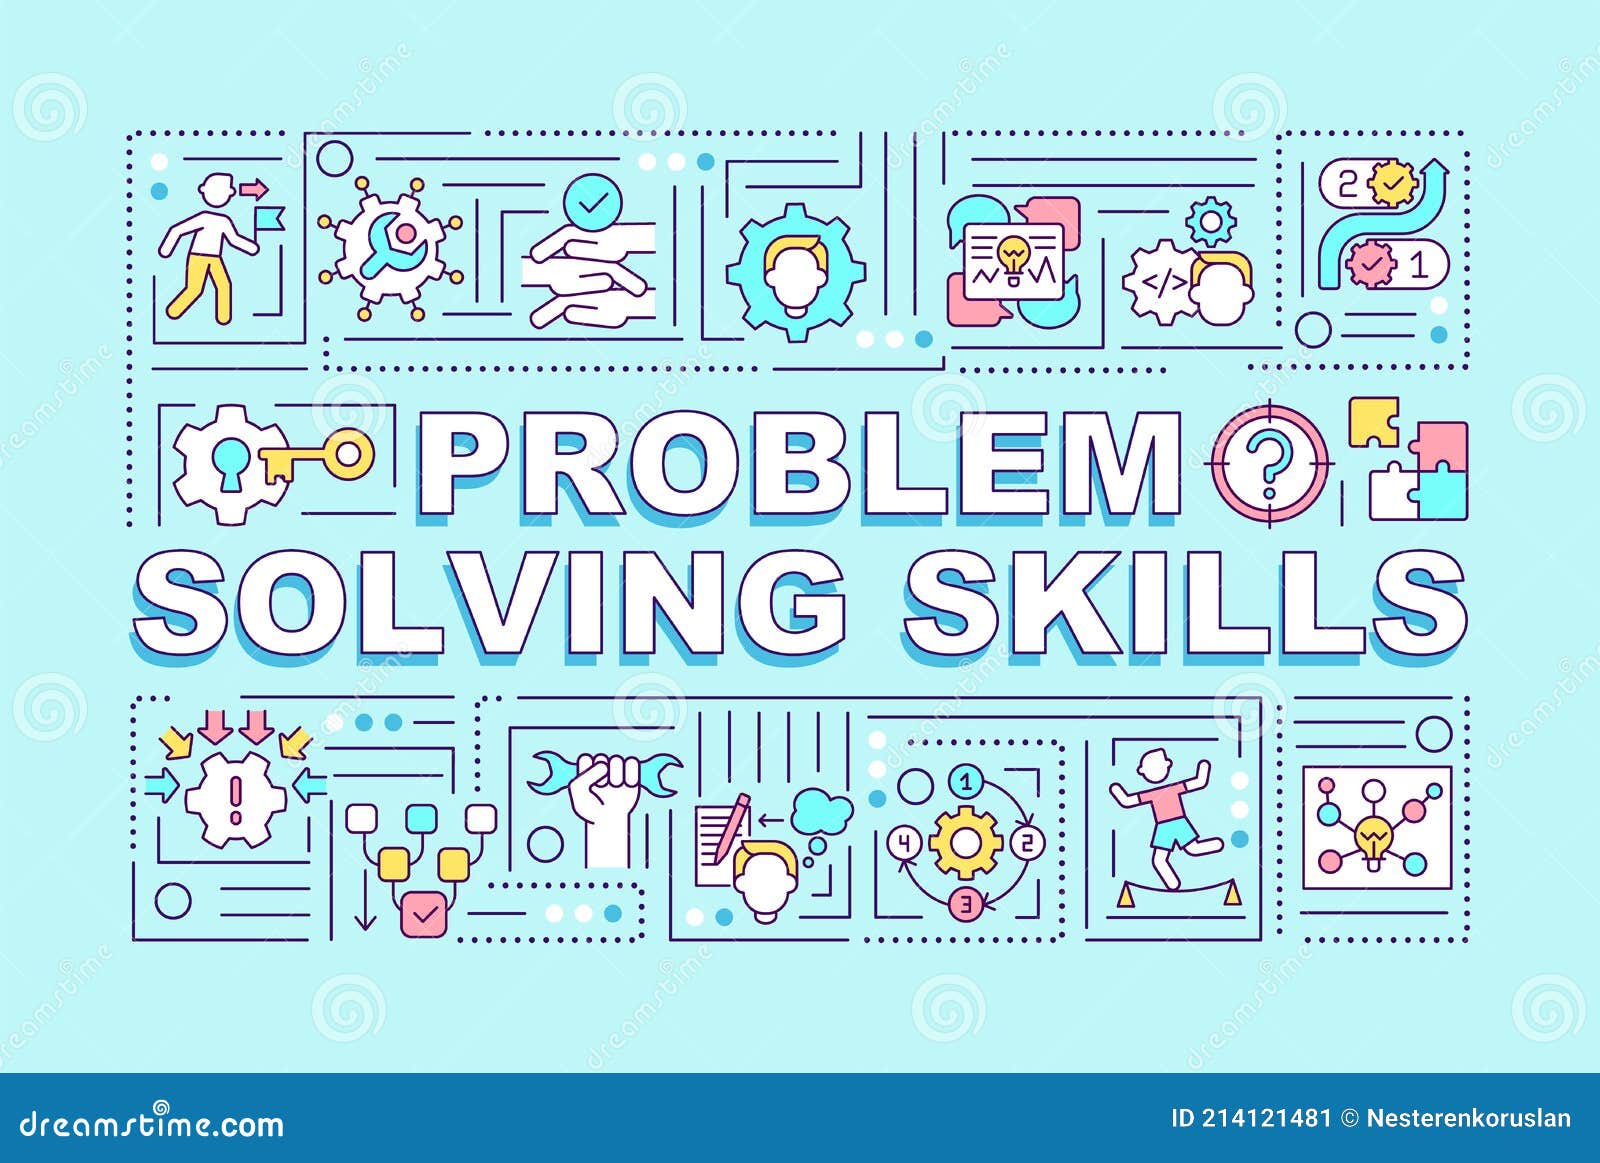 problem solving skills words